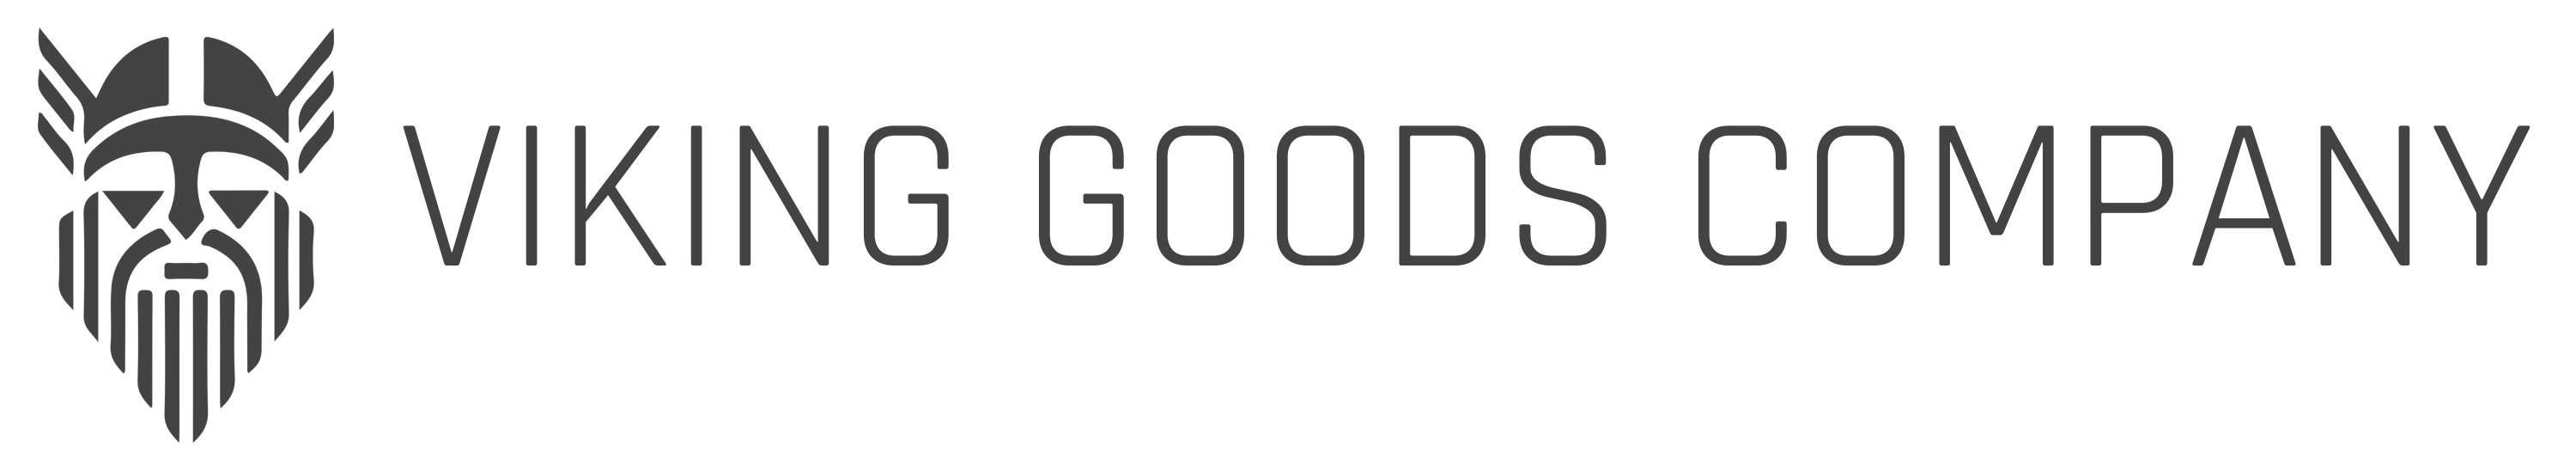 faqs - Viking Goods Company